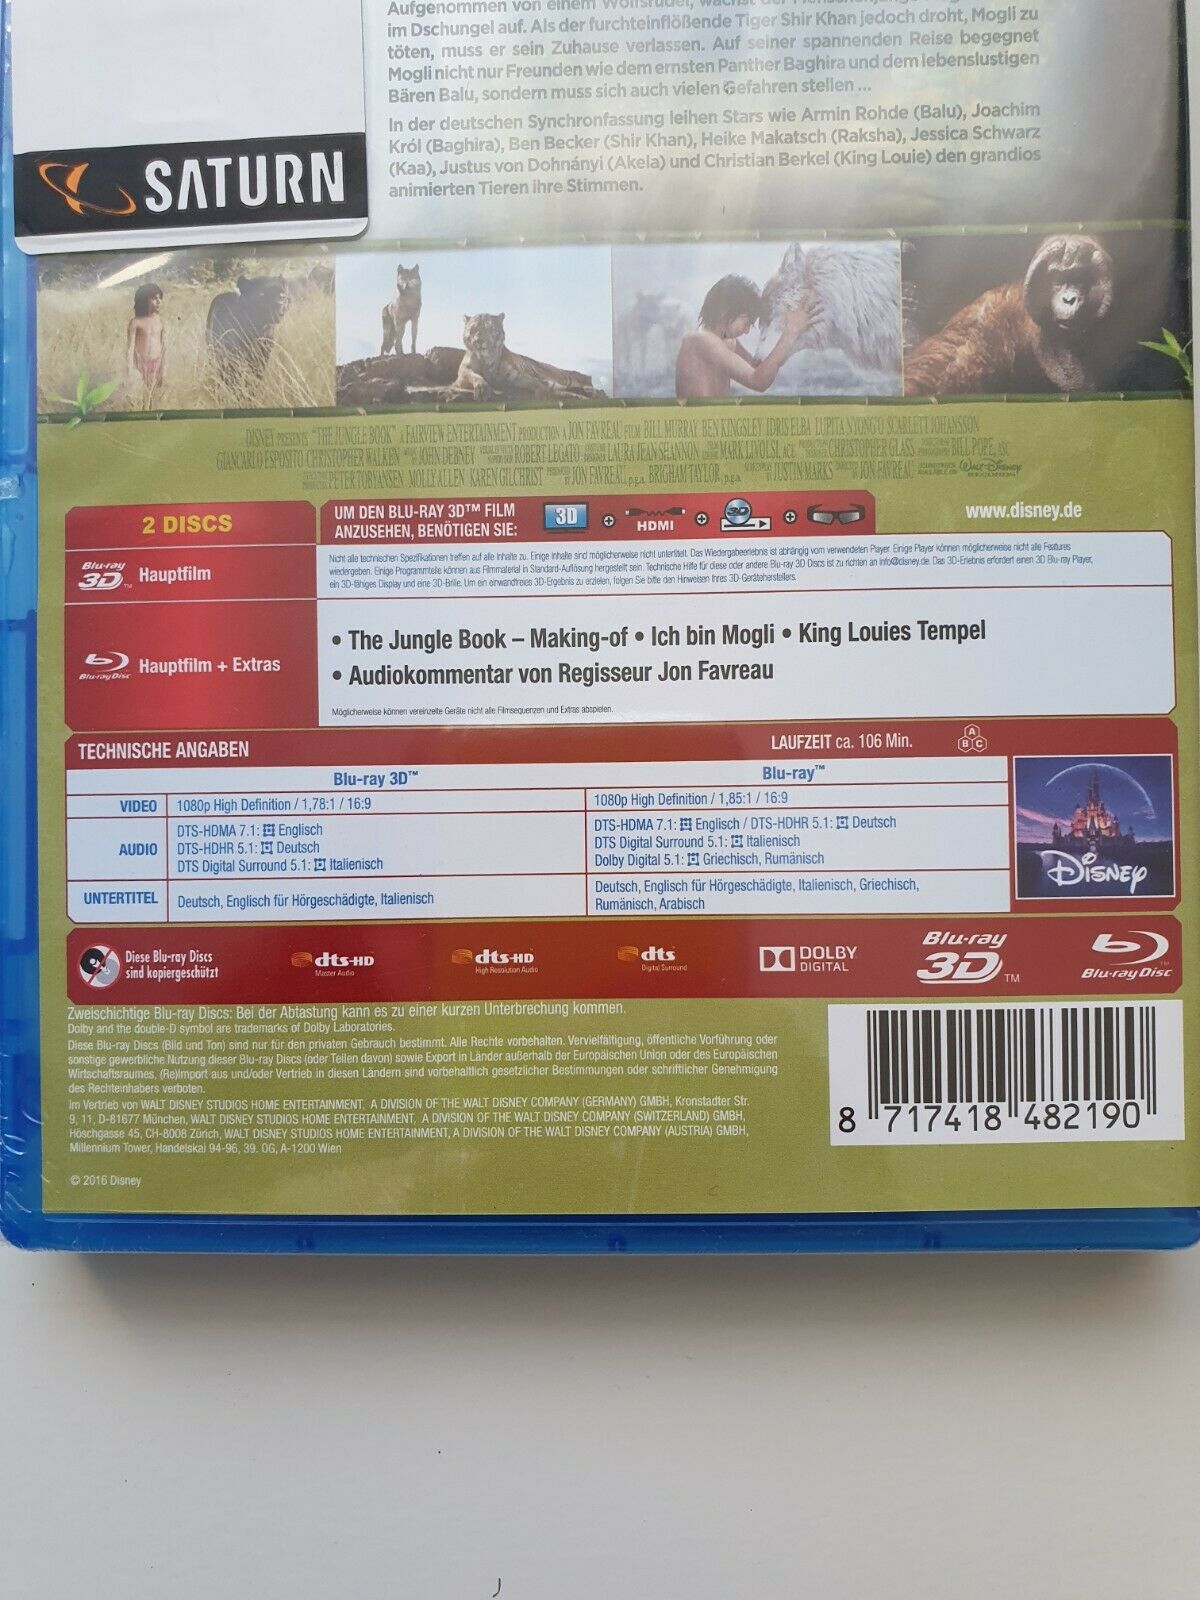 8717418482190 The Jungle Book - Disney 3D+2D Blu-ray 2016